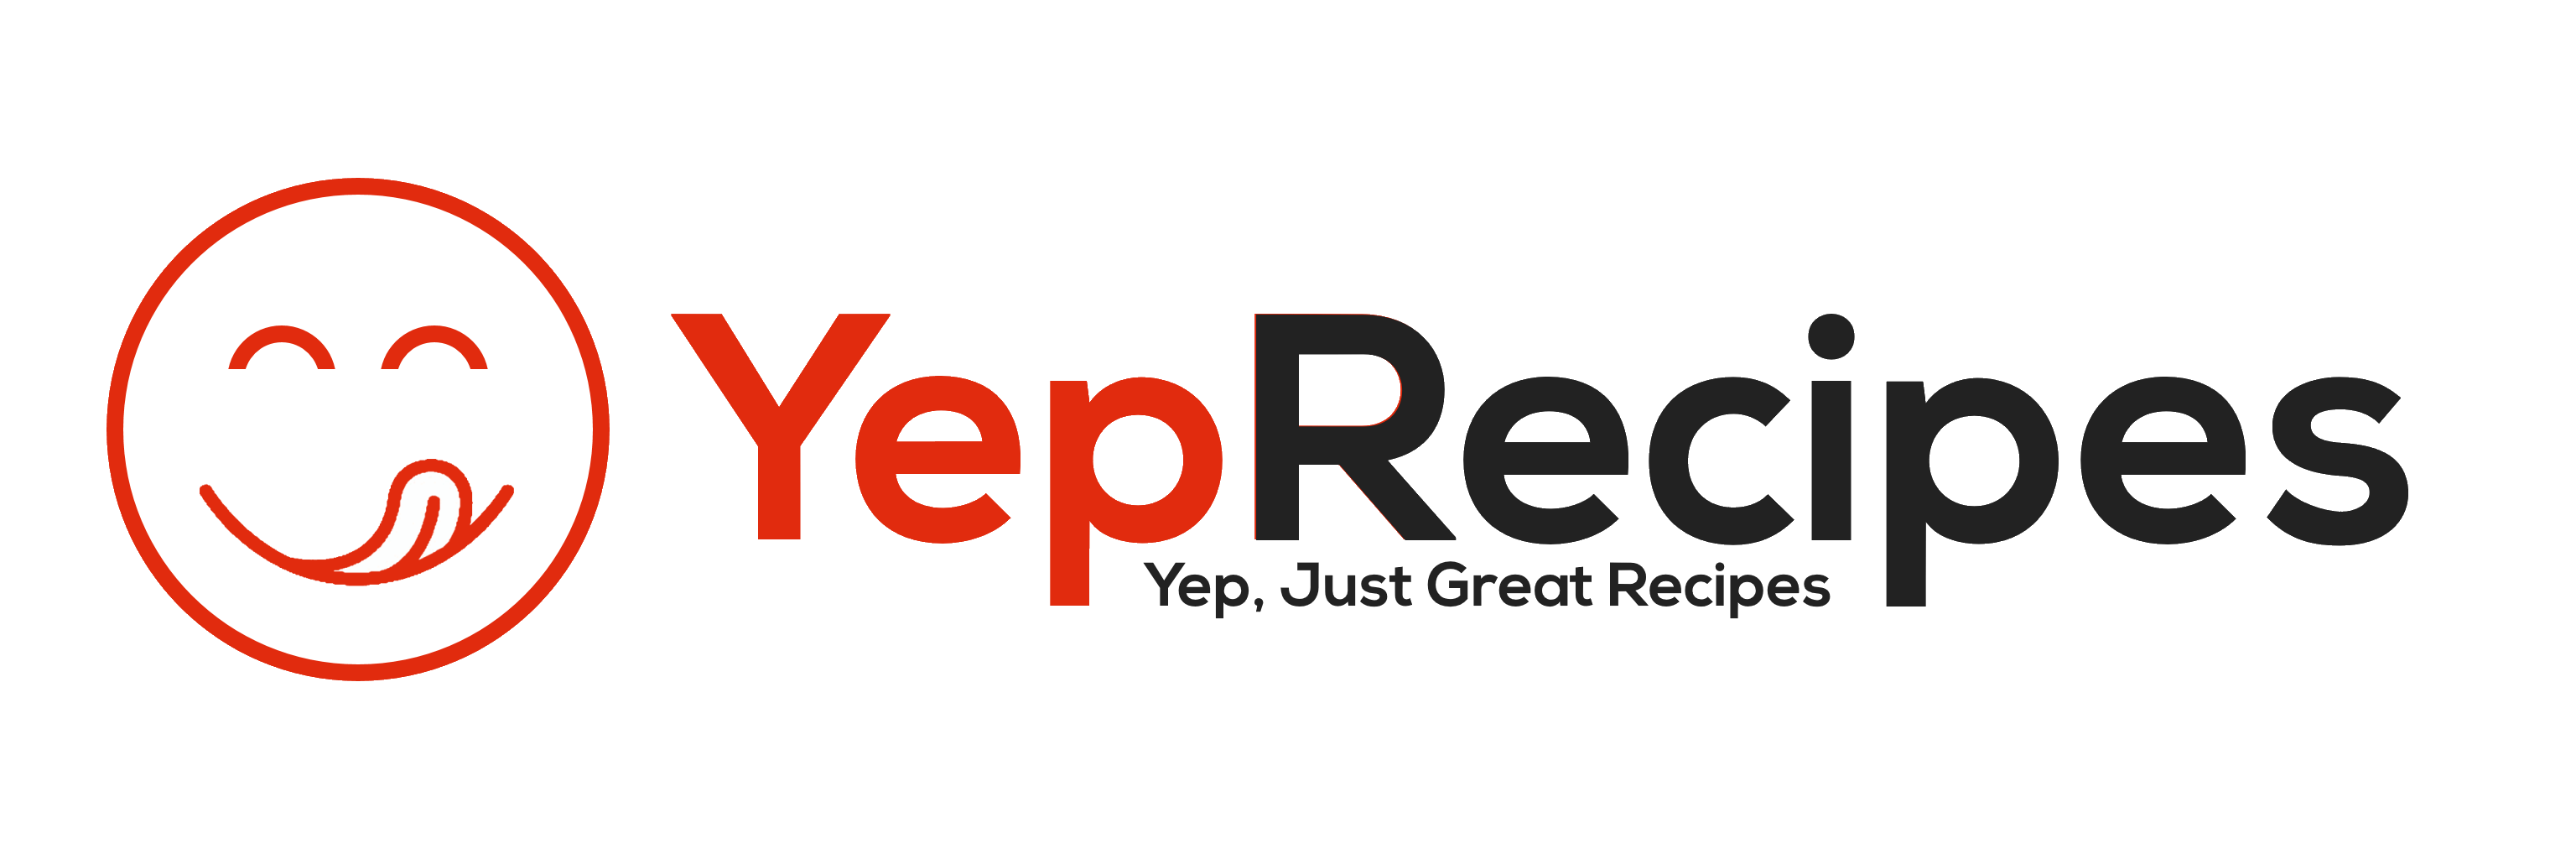 YepRecipes Home Logo